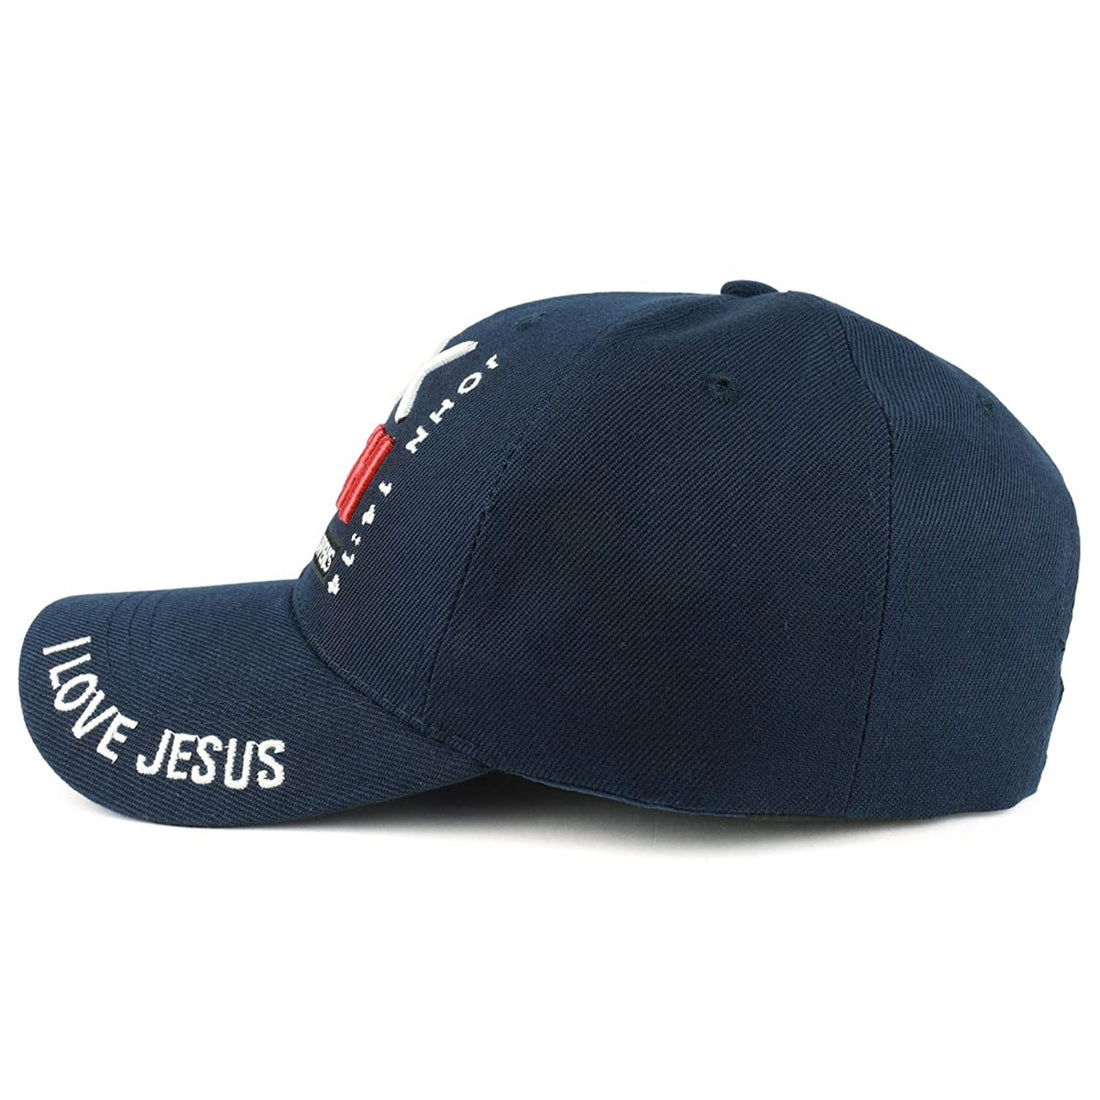 Trendy Apparel Shop Push Pray Until something Happens 3D Embroidered Christian Theme Baseball Cap